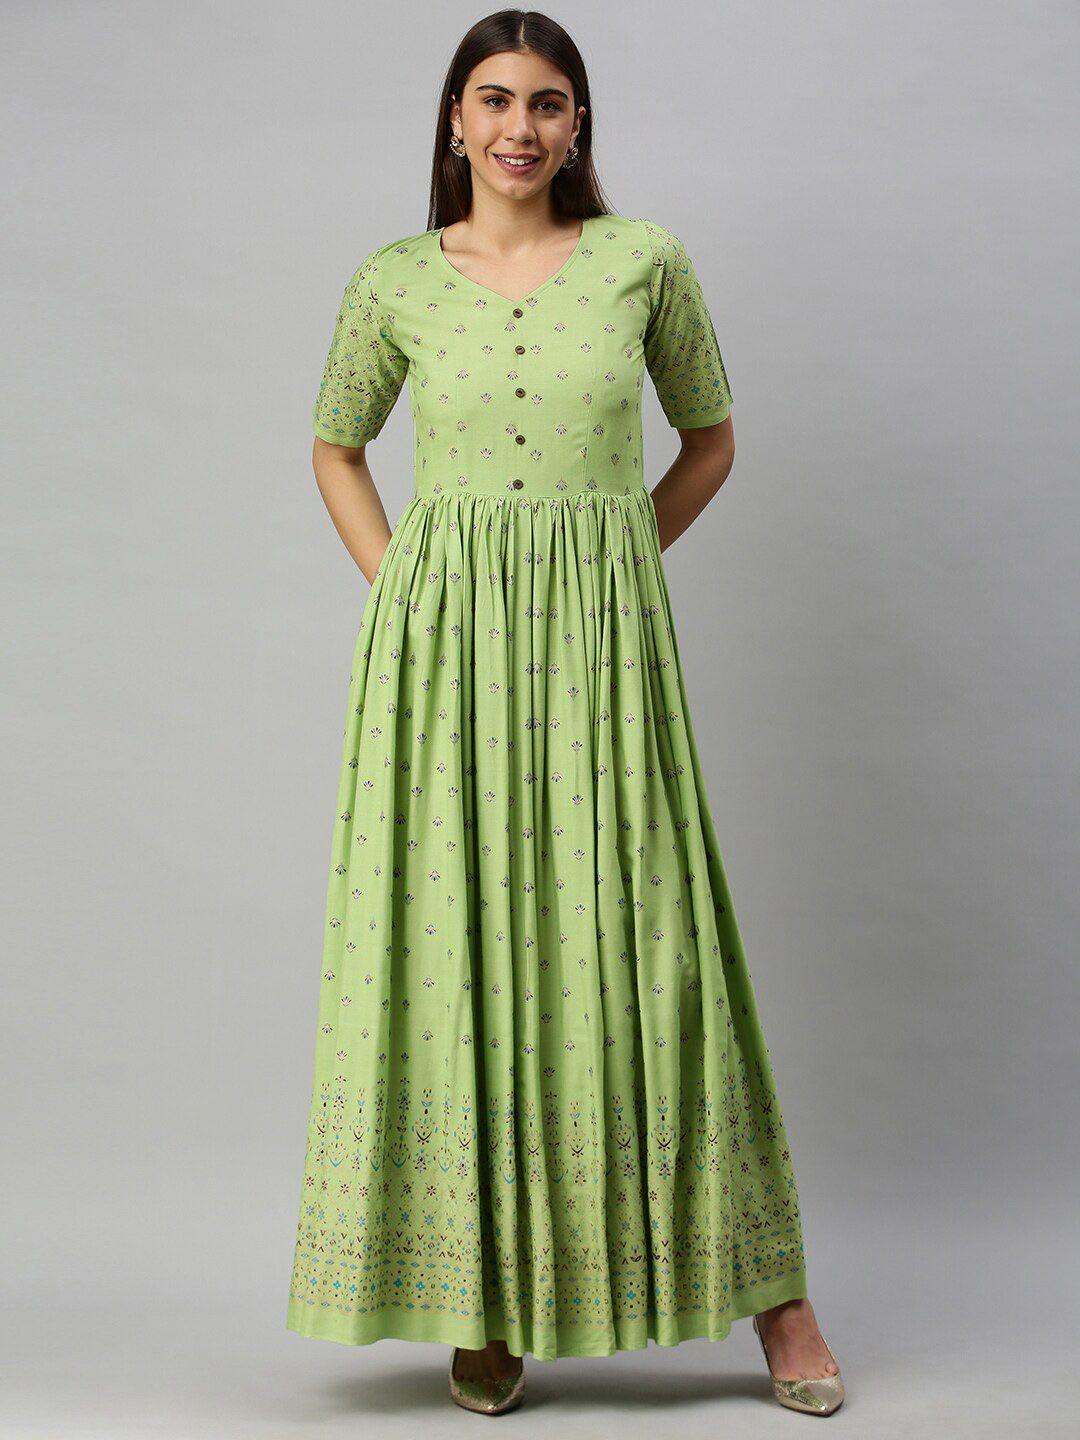 vinya green dress